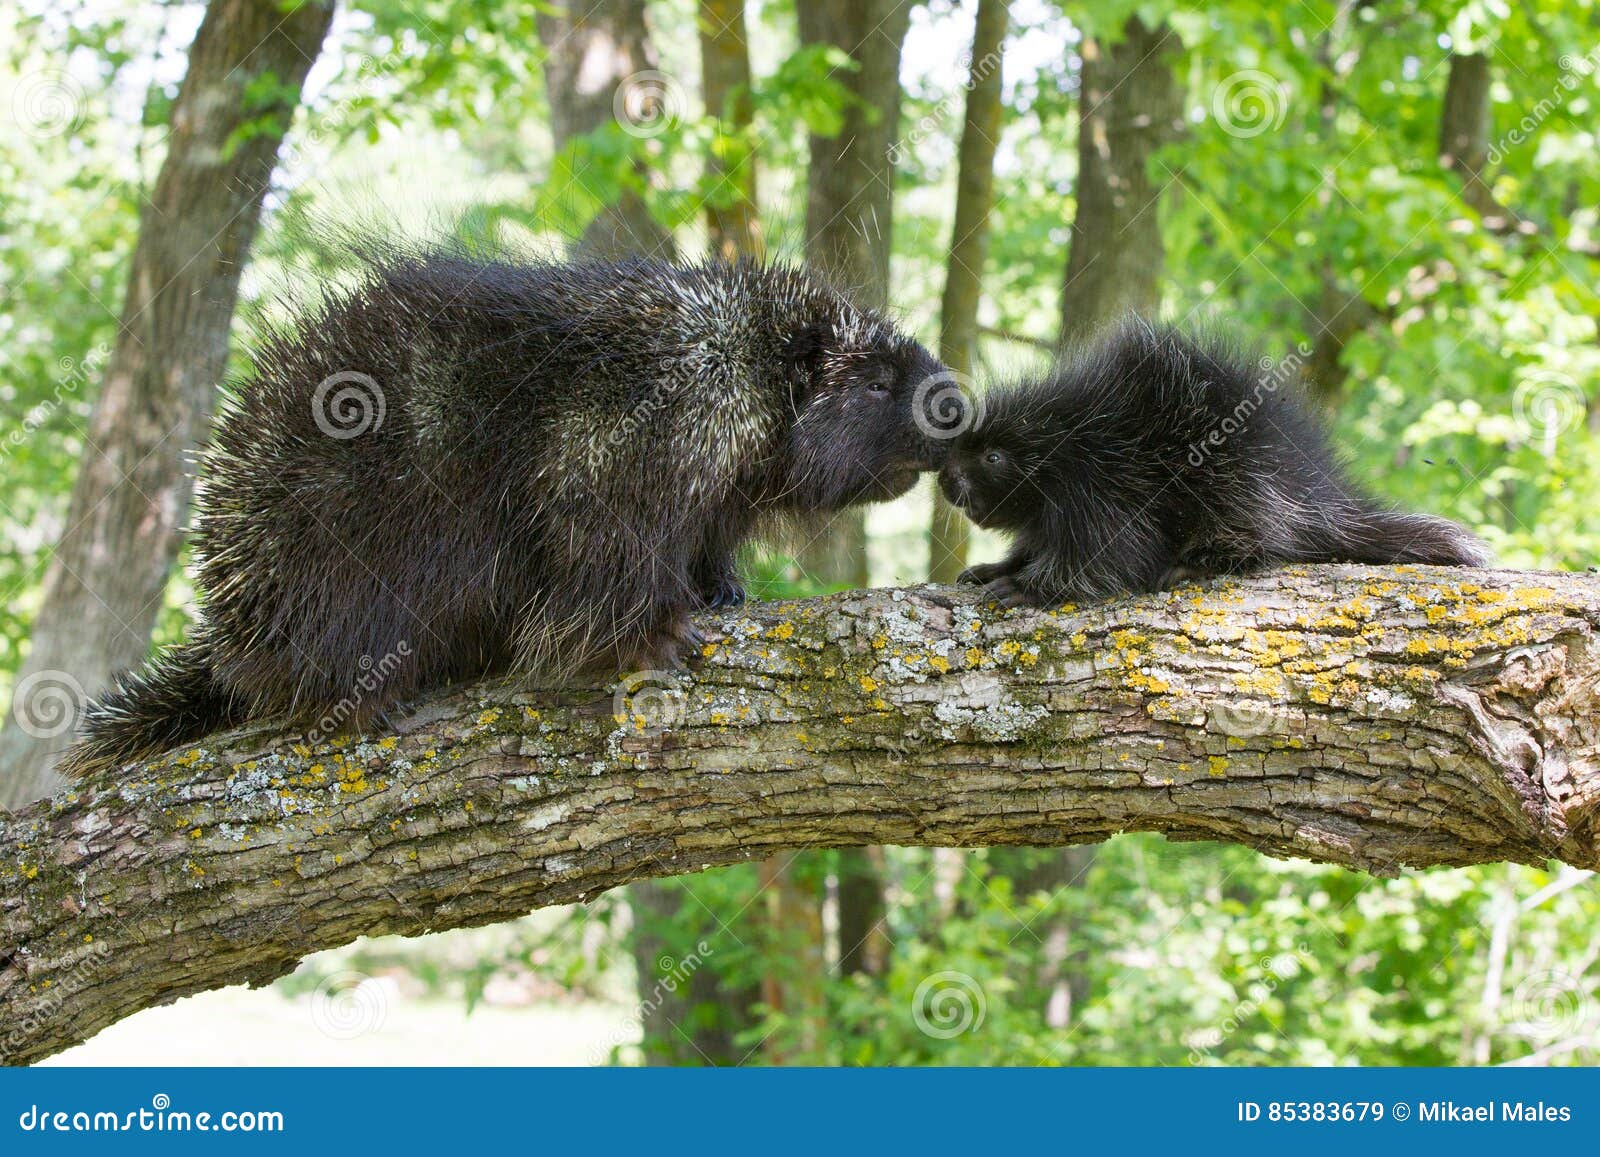 adult porcupine kissing baby porcupine